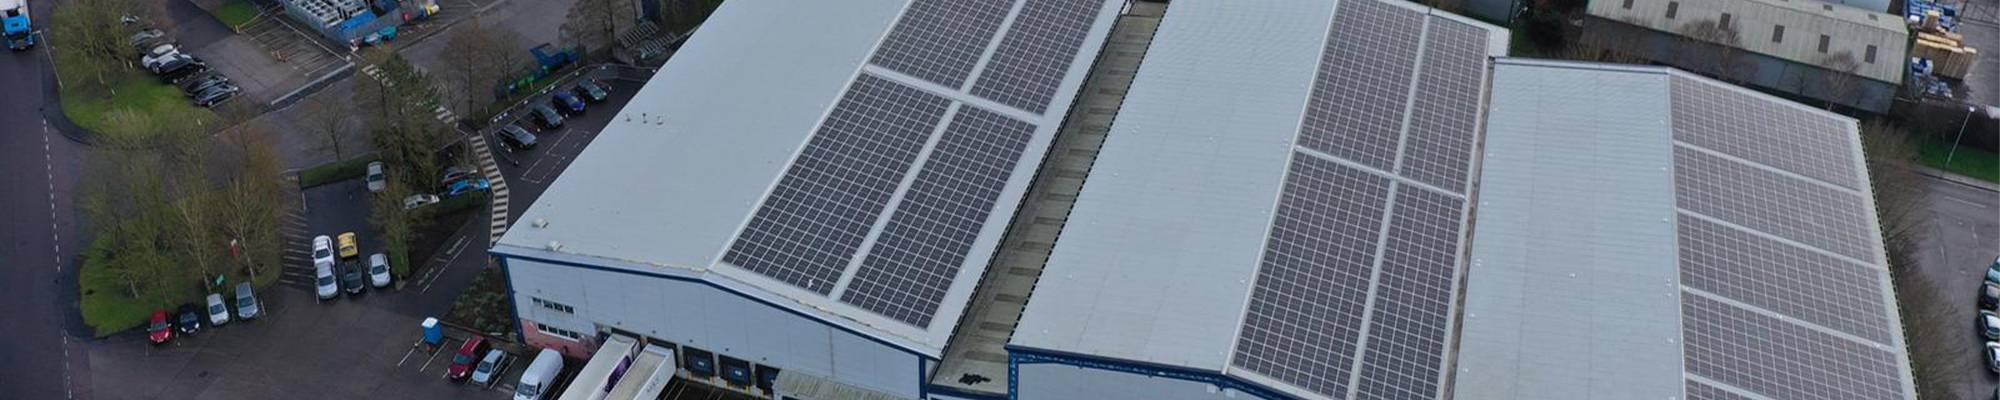 Solar Panels at Yeo Valley Organic